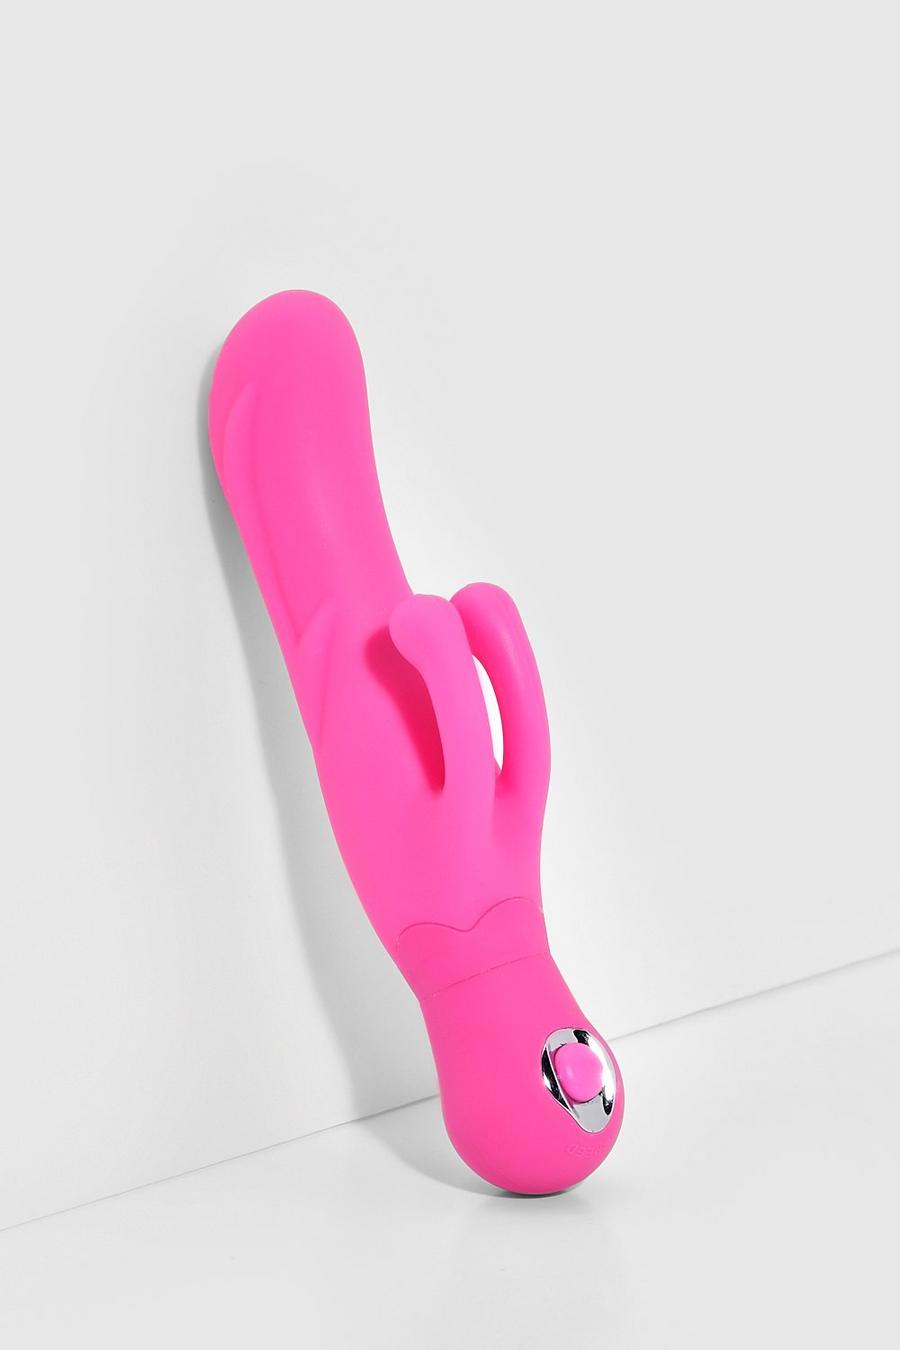 Pink Double Dancer Vibrator 